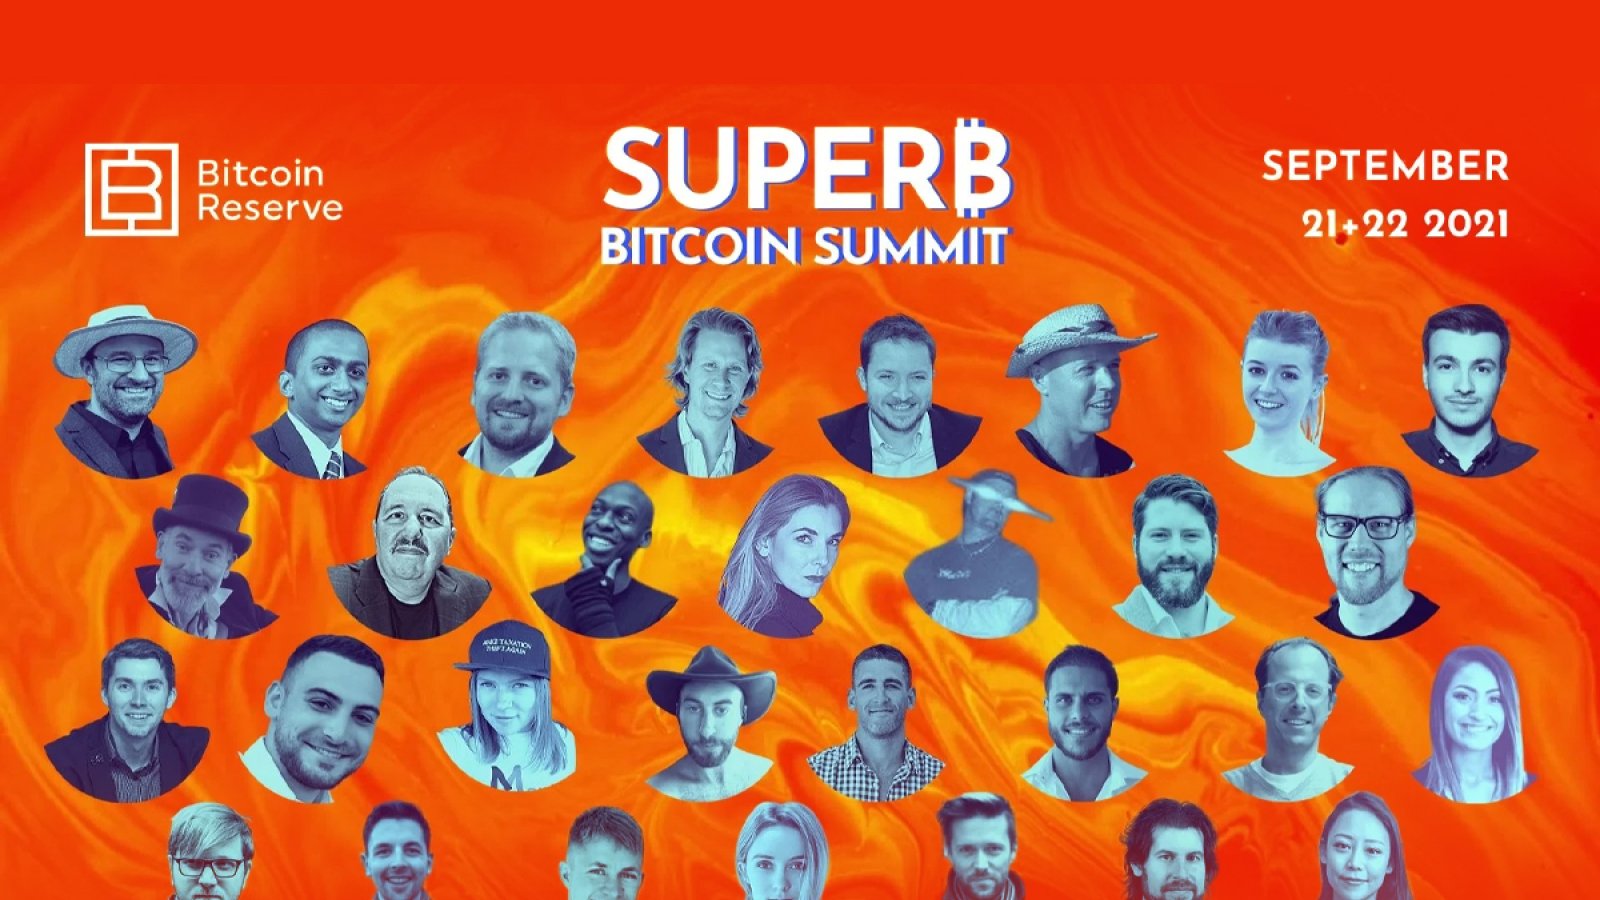 SUPERB SUMMIT Gathers Bitcoin Industry